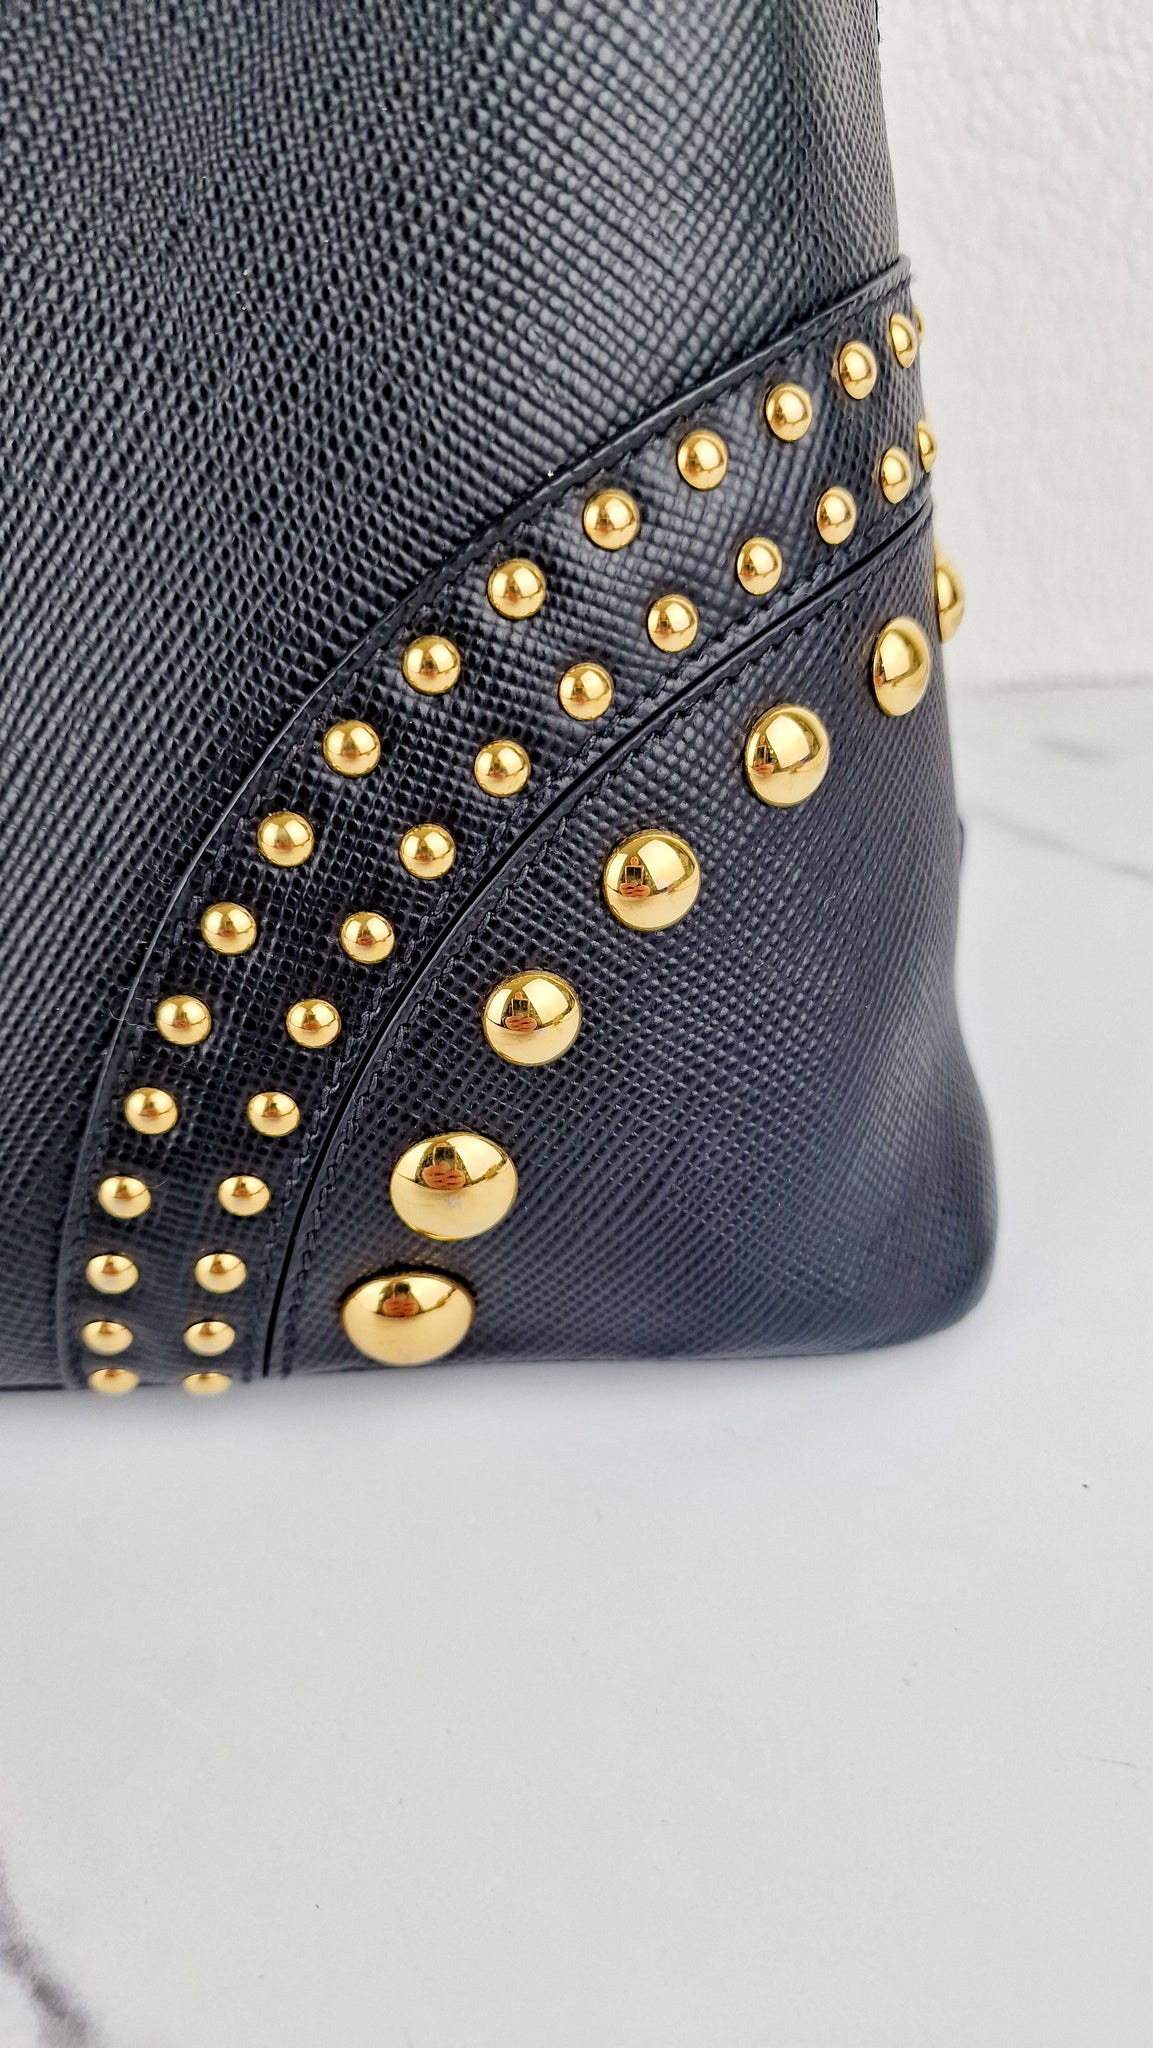 Prada Saffiano Cuir Handbag in Black Leather with Gold Studs